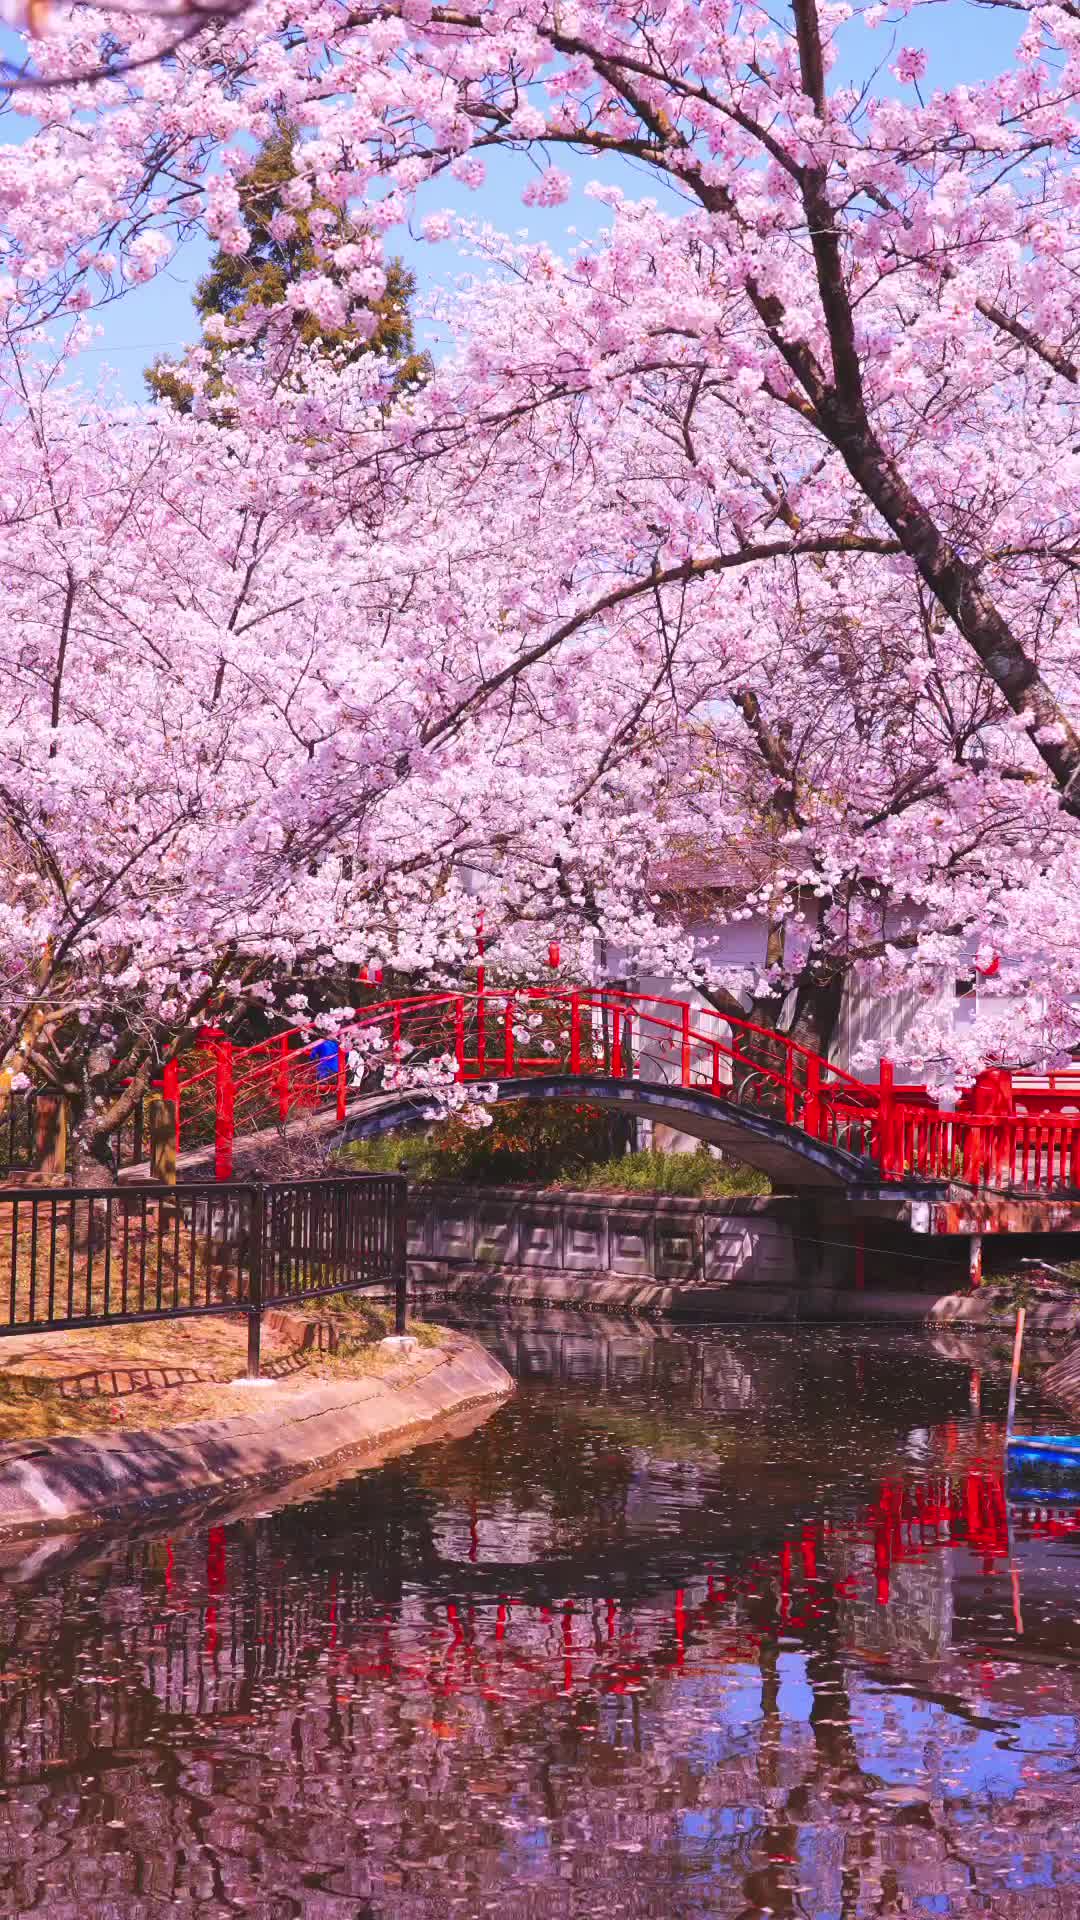 Spectacular Cherry Blossoms at Asahiyama Forest Park